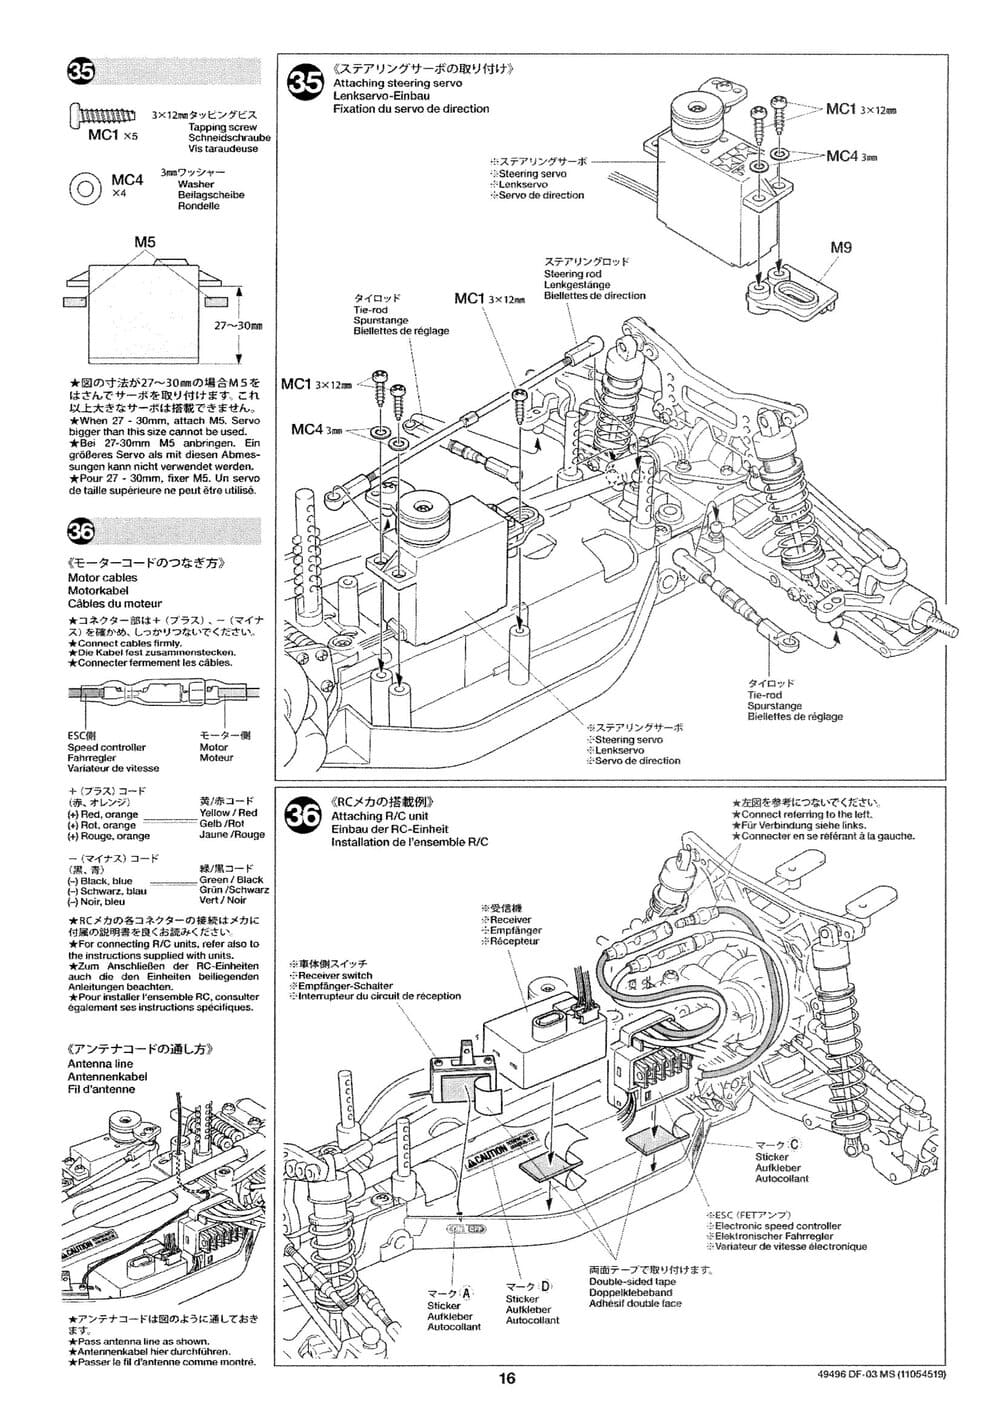 Tamiya - DF-03 MS Chassis Chassis - Manual - Page 16